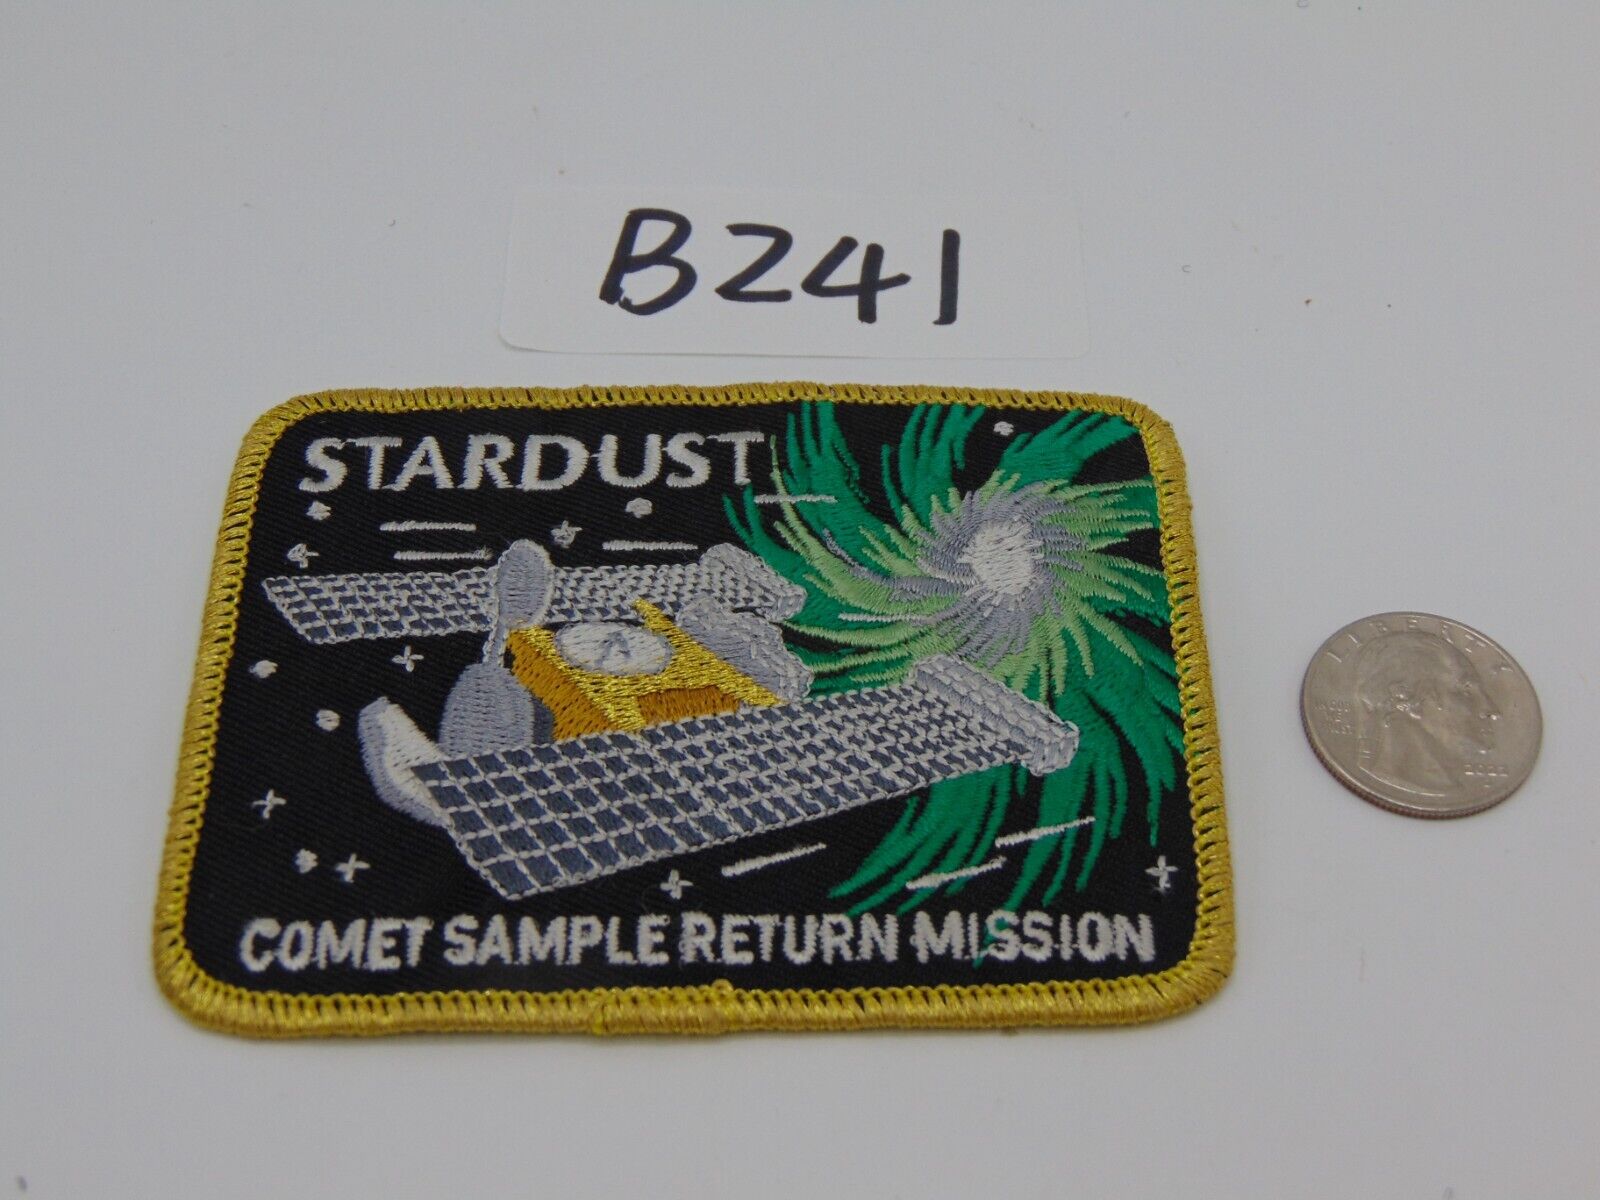 STARDUST DELTA II Launch COMET SAMPLE RETURN MISSION NASA JPL SPACE PATCH NEW